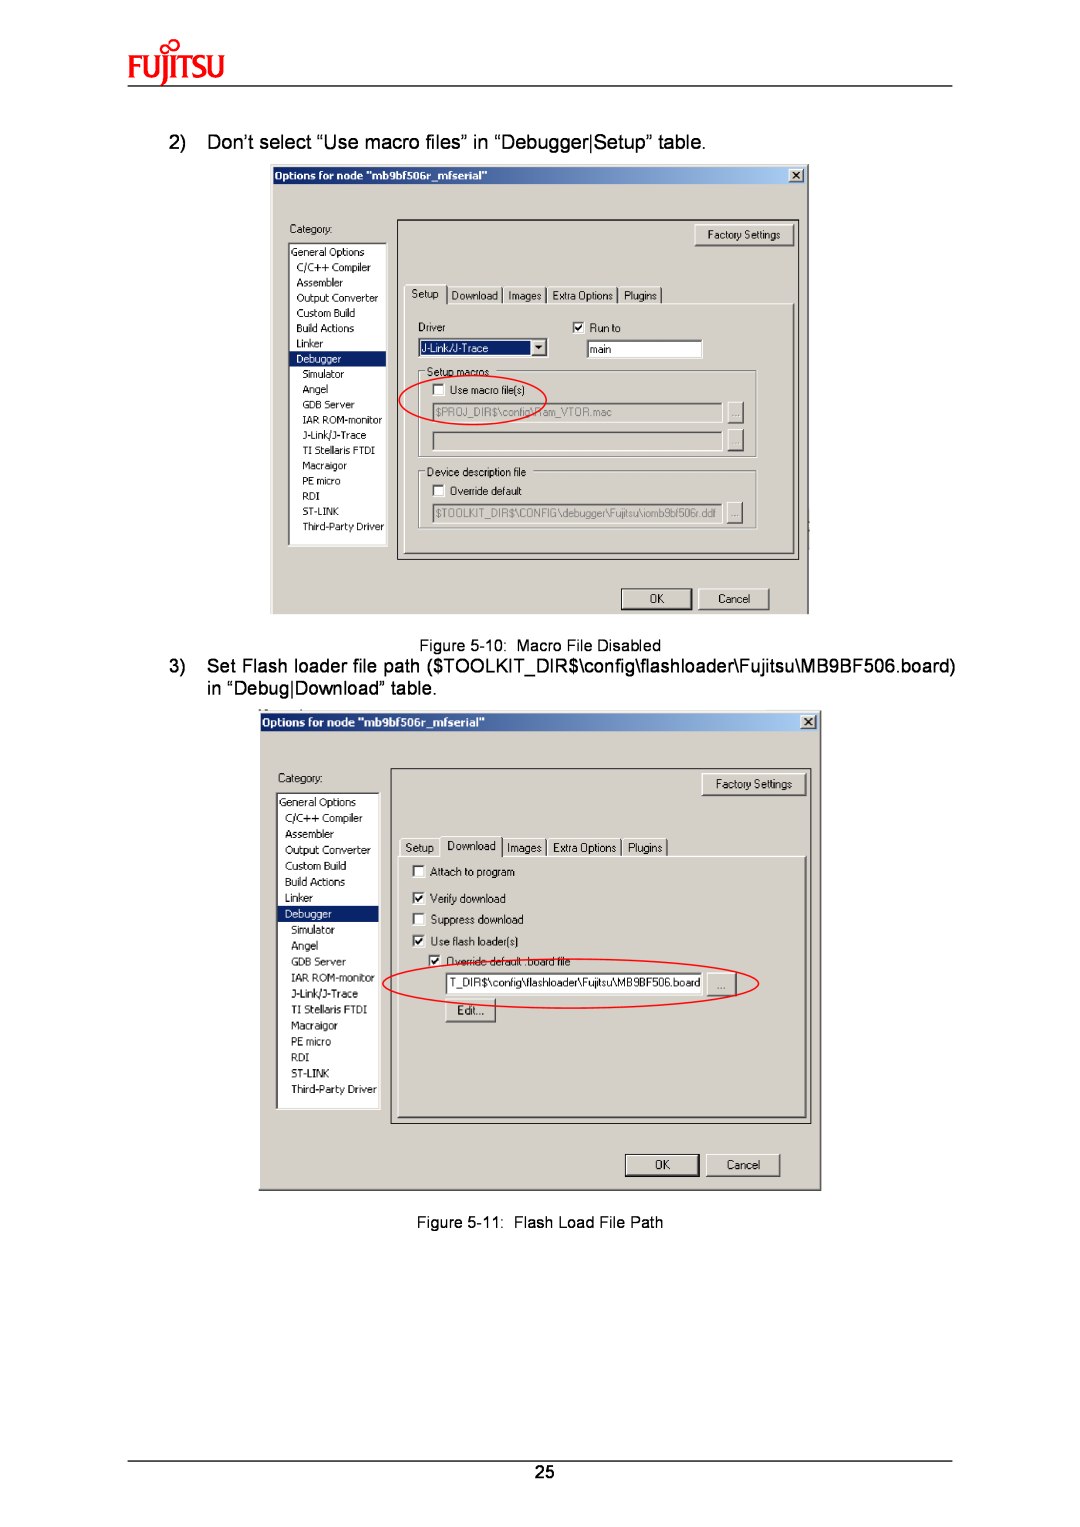 Fujitsu MB9B500 Series user manual 2 Don’t select “Use macro files” in “DebuggerSetup” table, 10 Macro File Disabled 